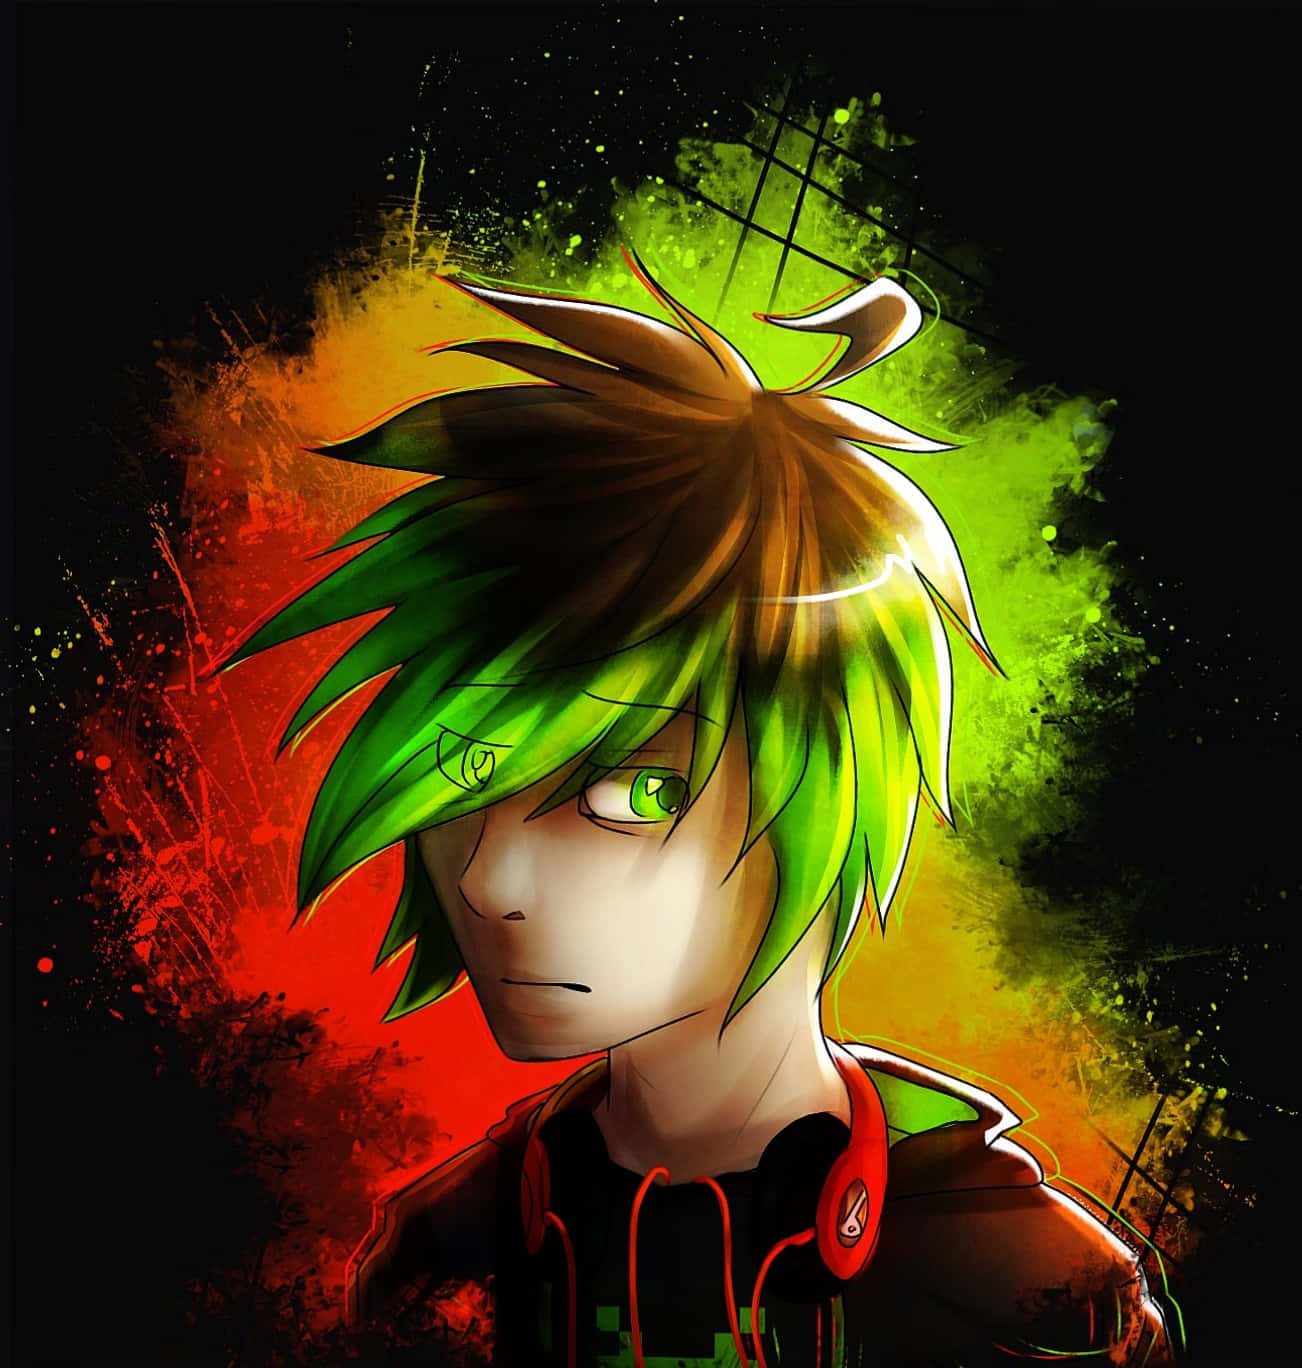 Download Anime Boy Xbox Profile Picture